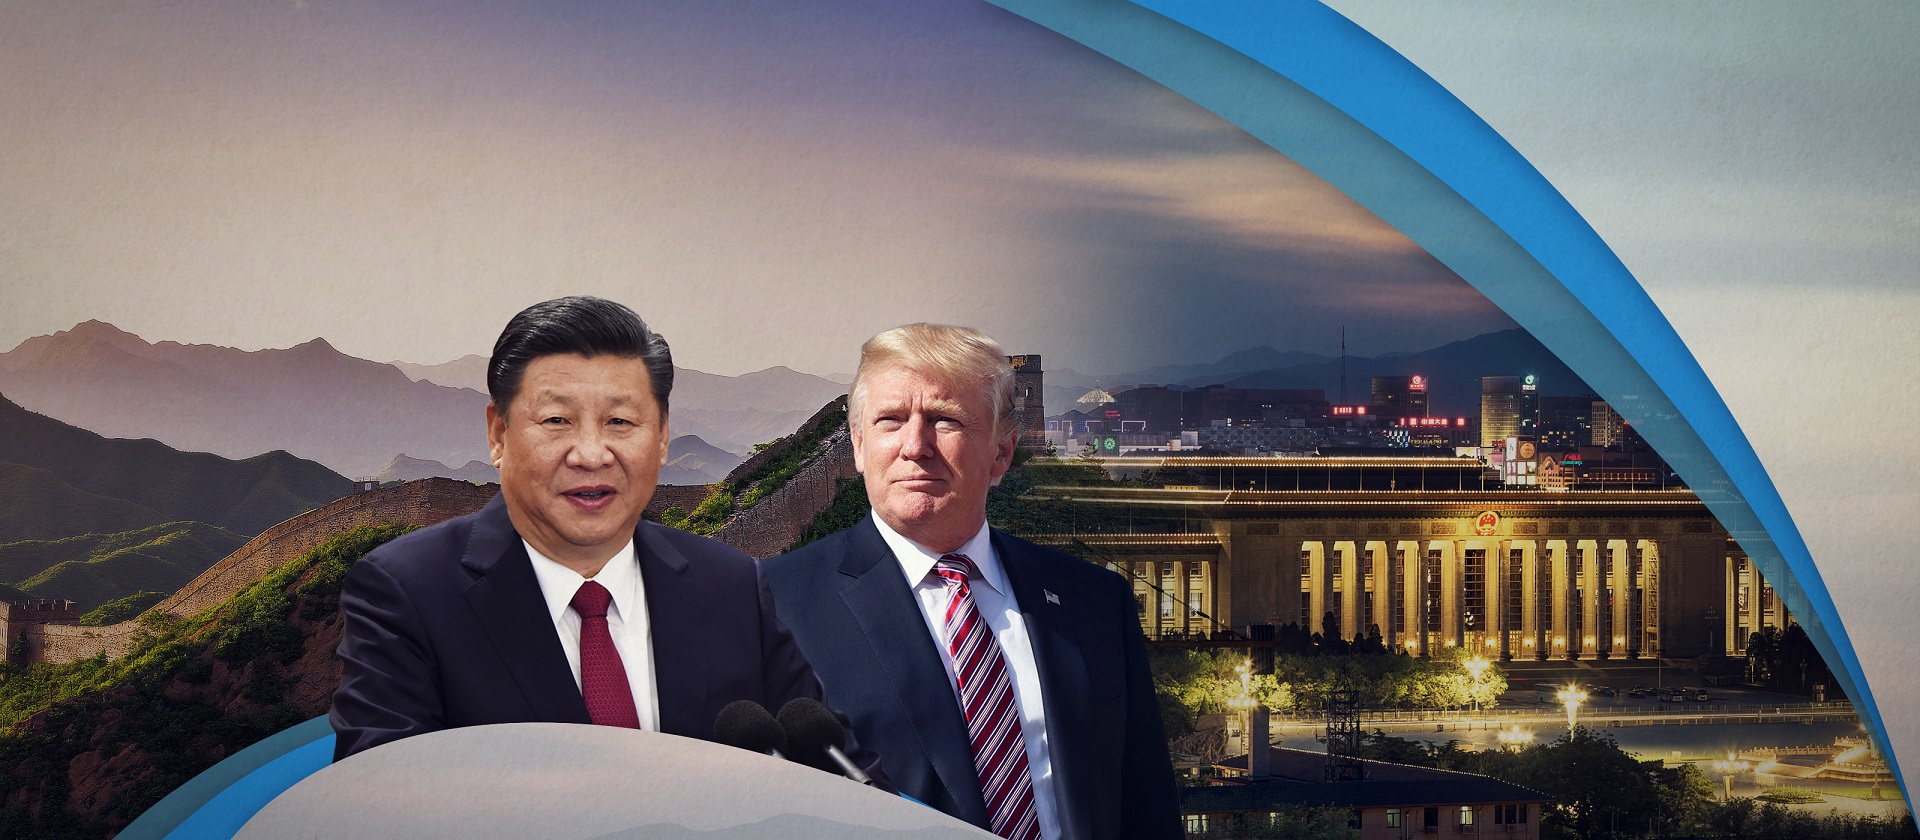 The Heat: Trump’s China trip